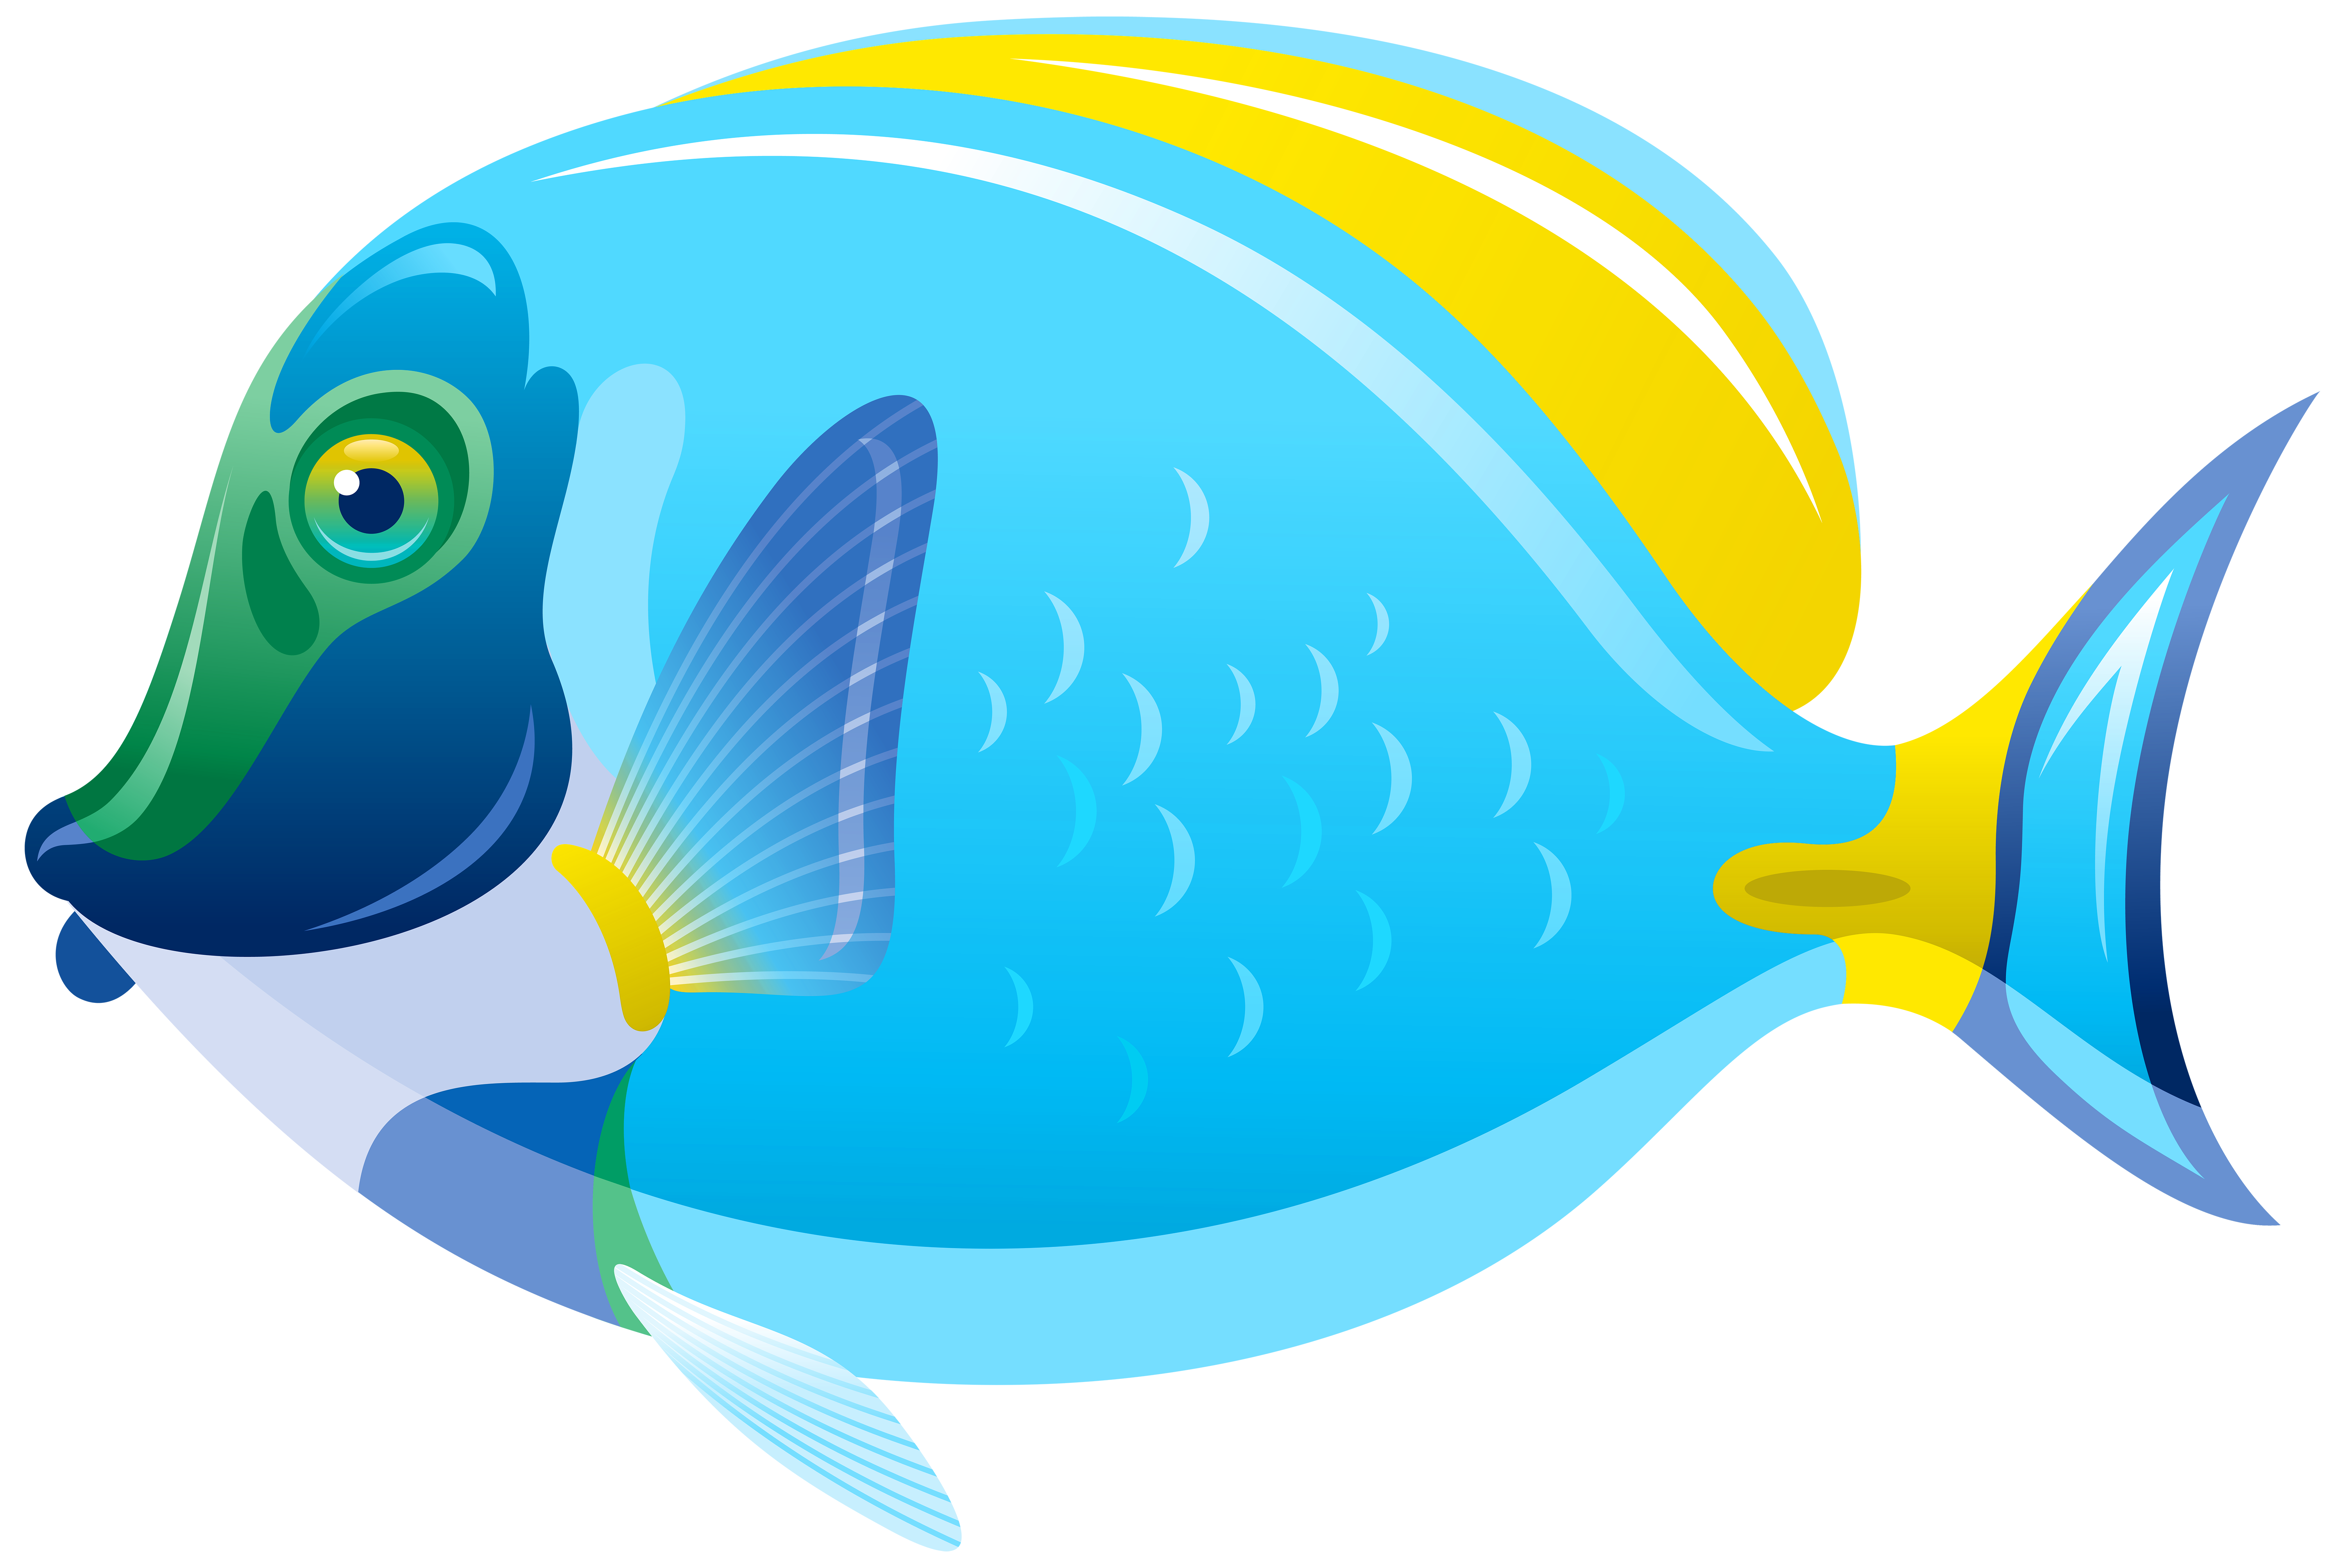 ocean fish clip art